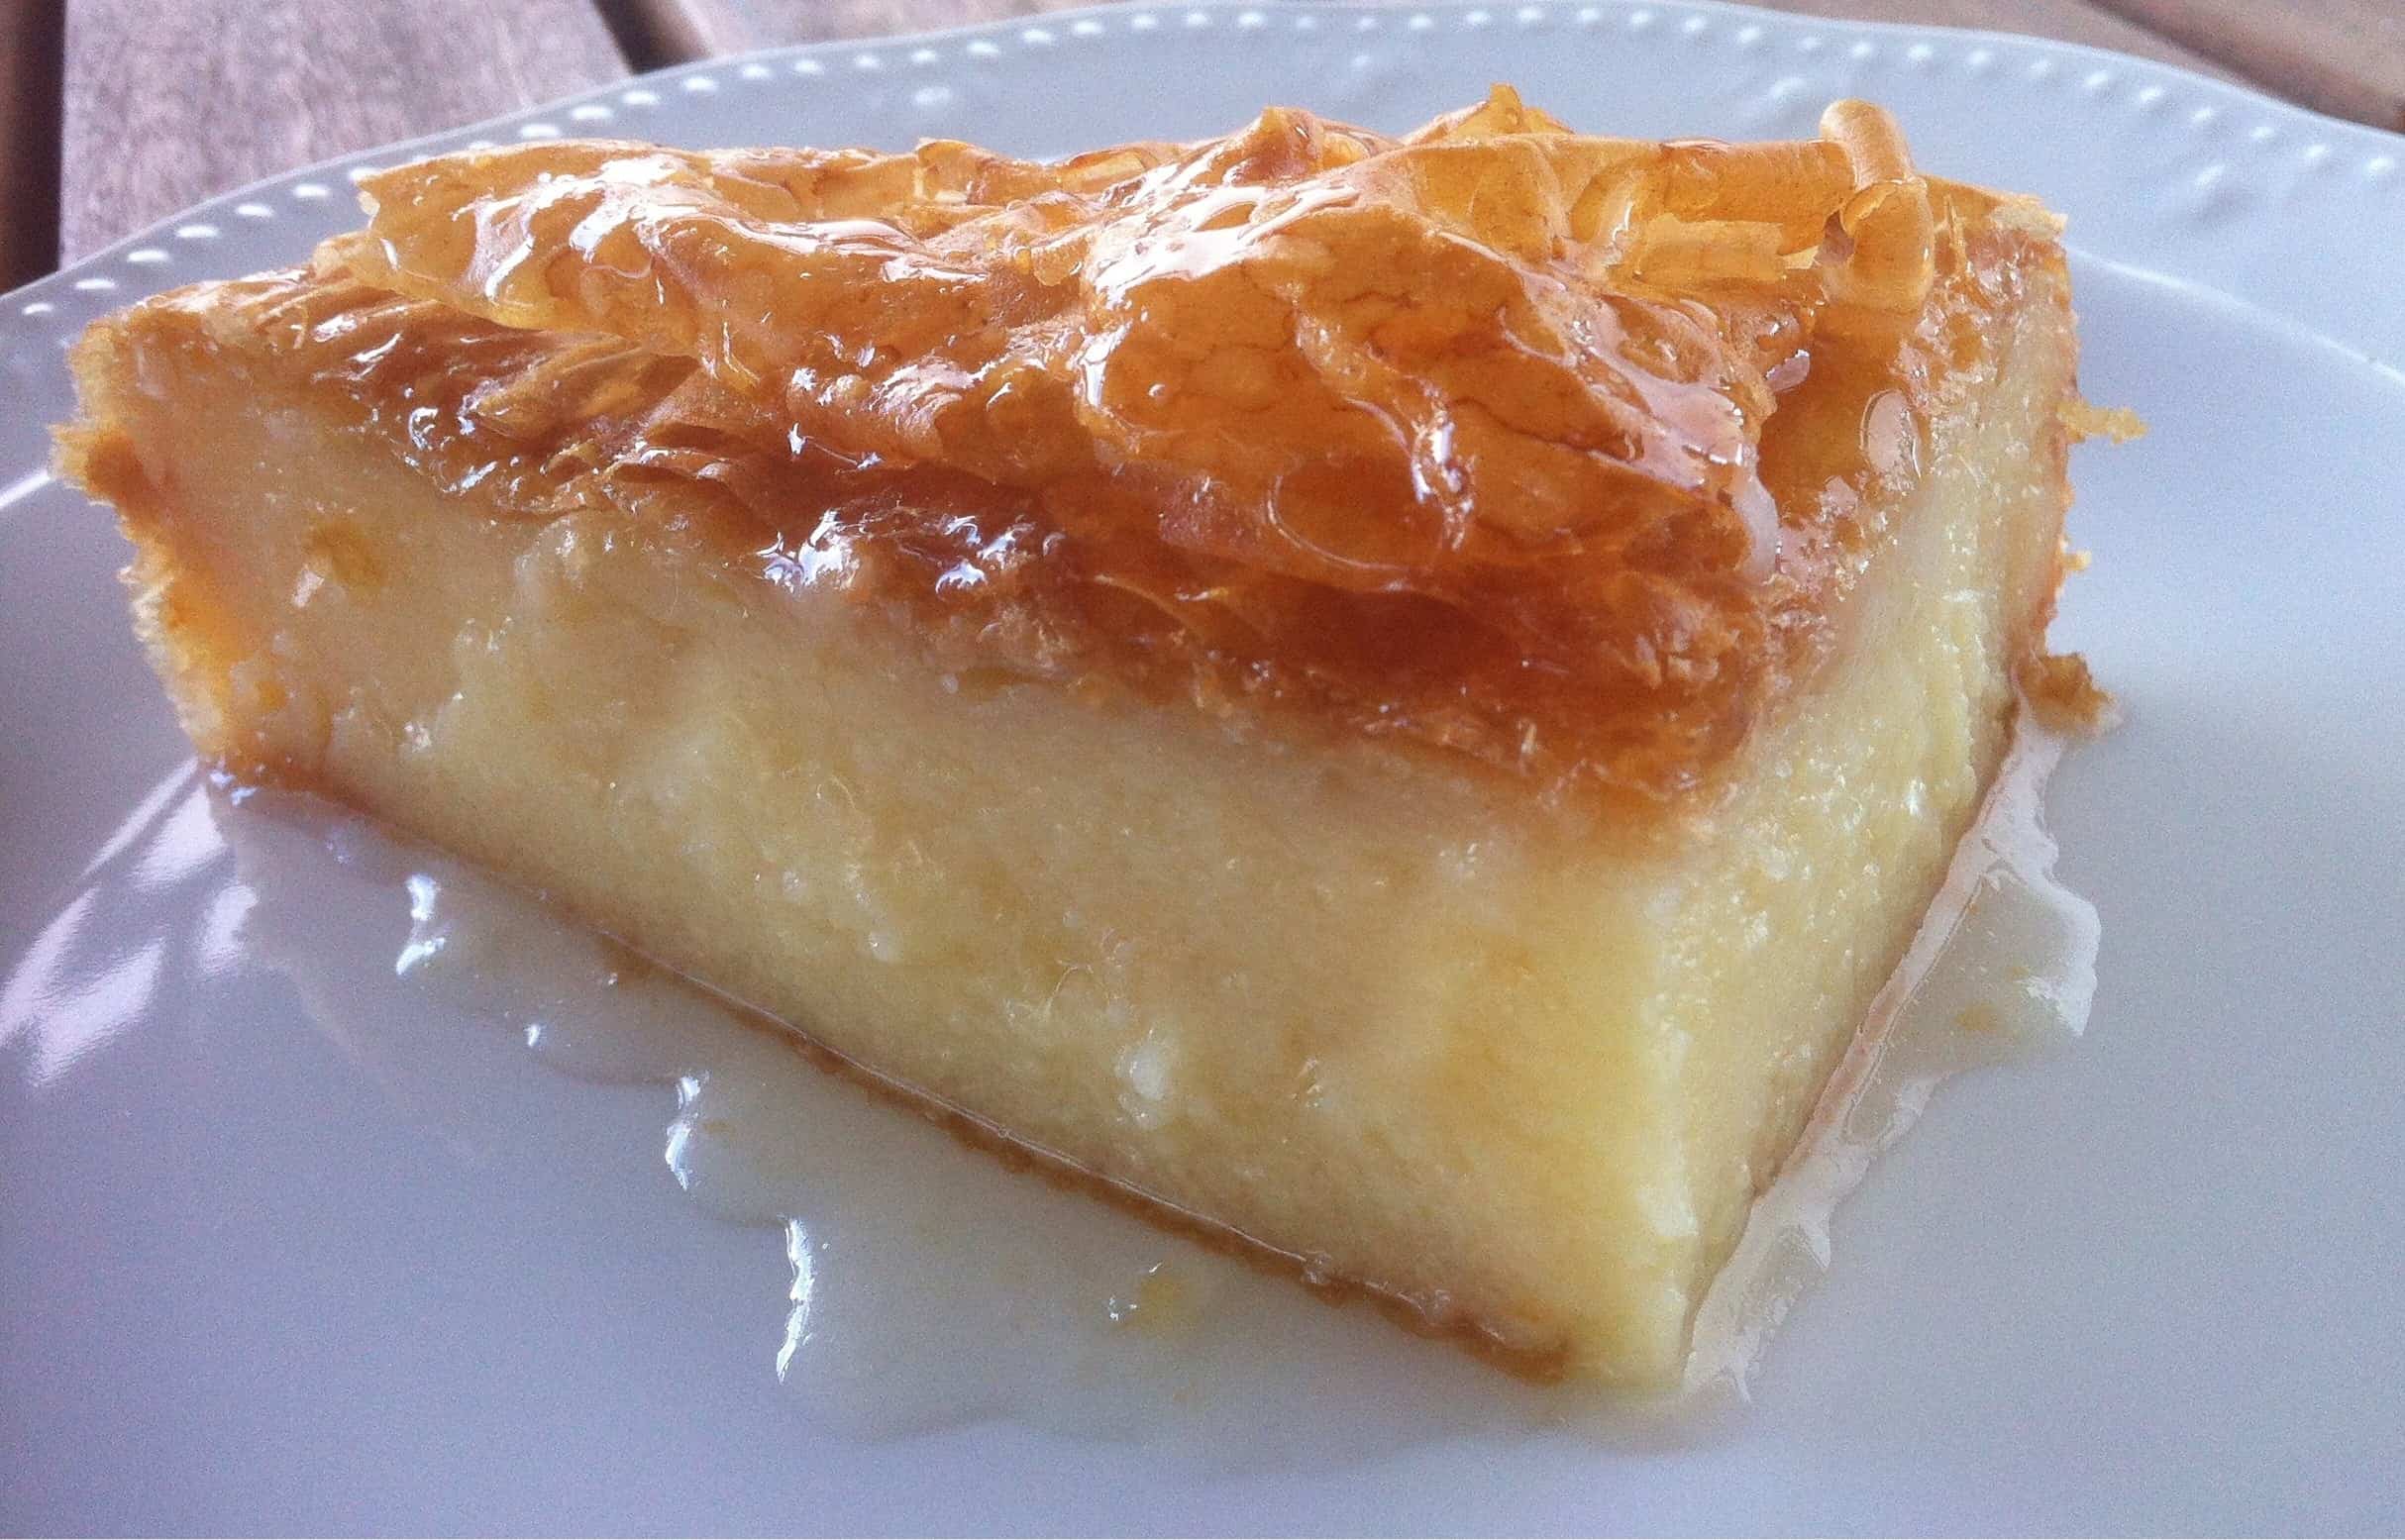 Galaktoboureko Recipe: This Traditional Greek Custard Dessert Recipe Is Crispy & Creamy in One Bite | Desserts